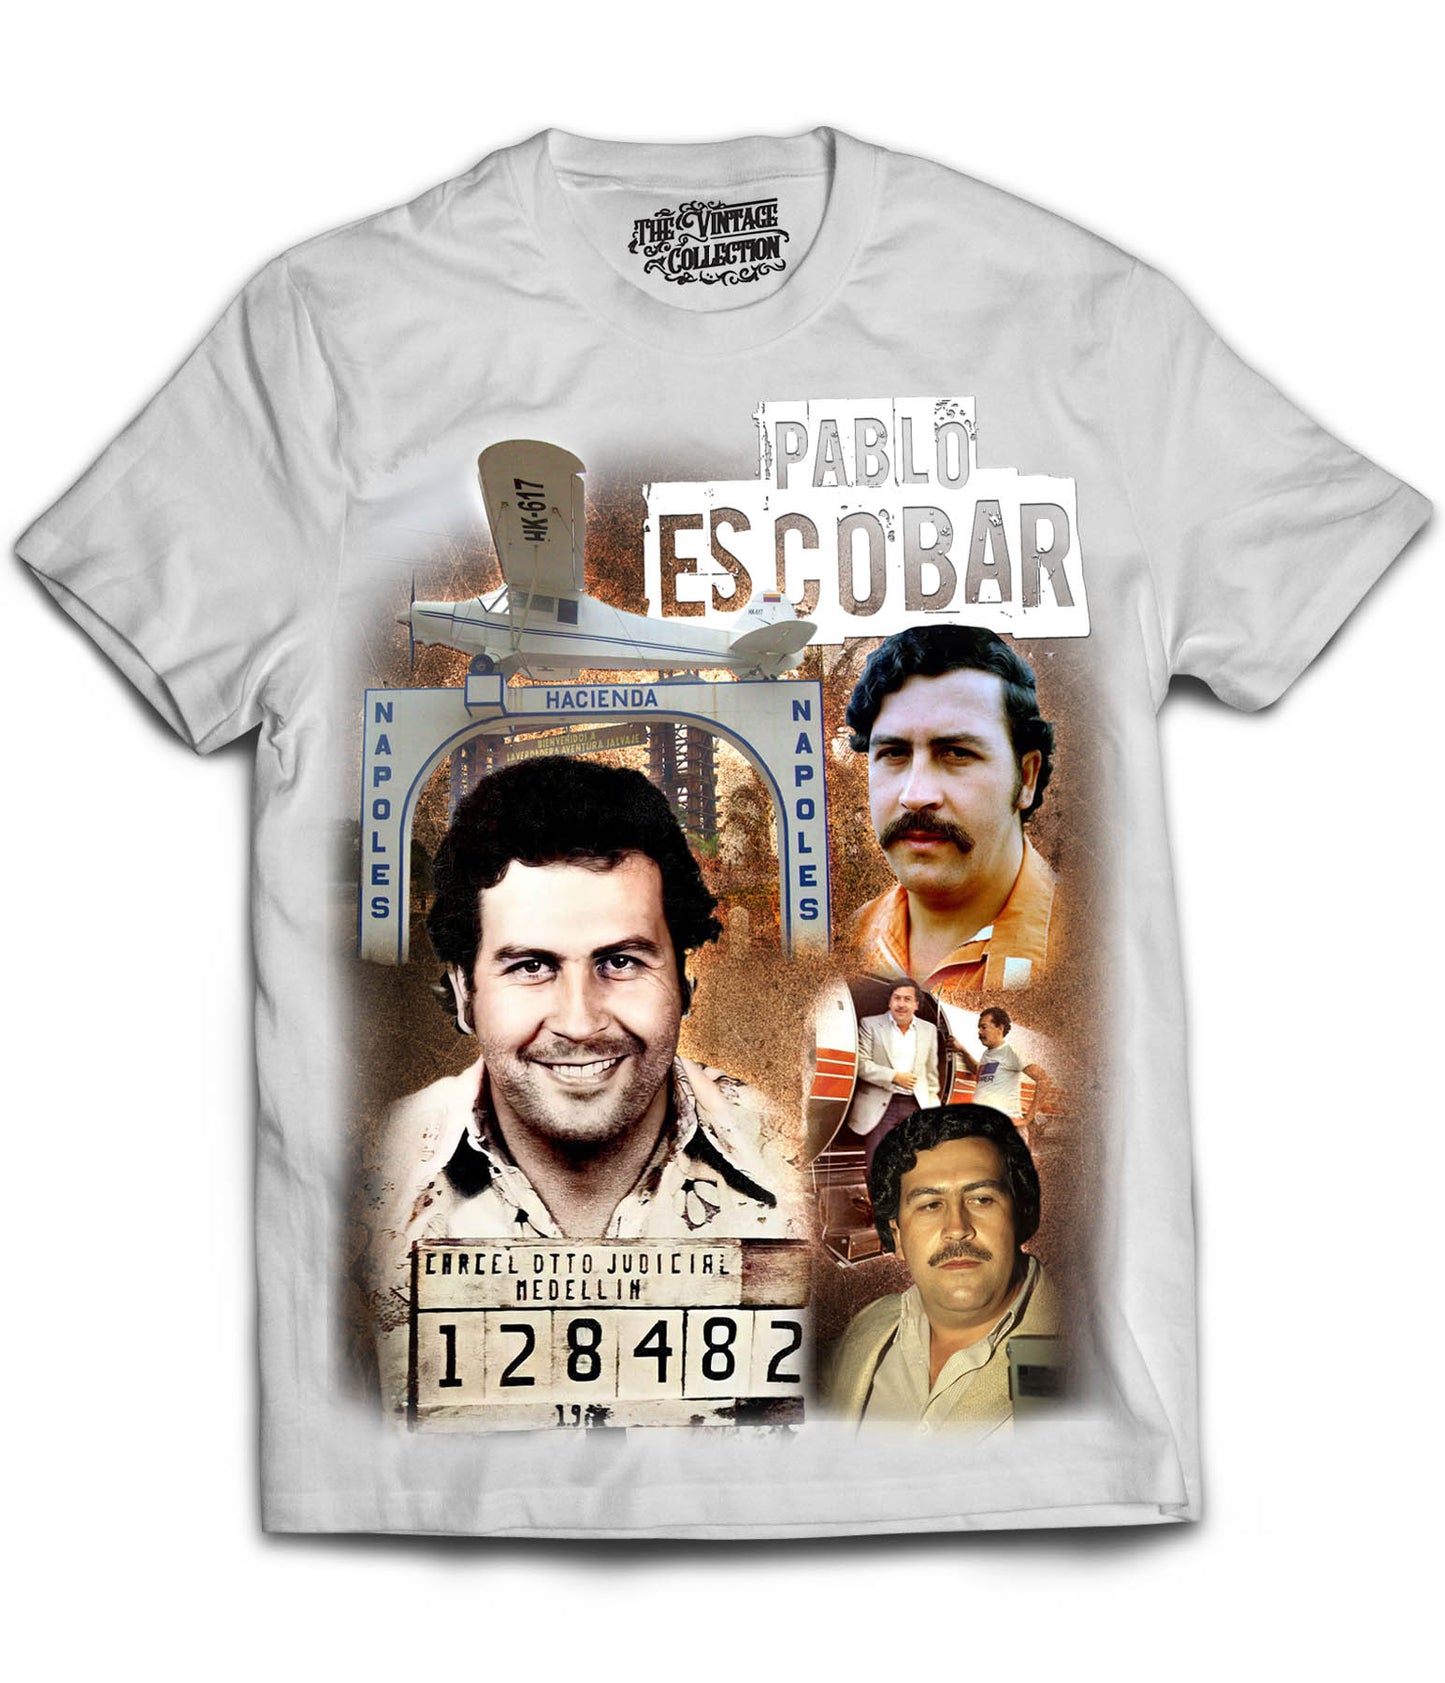 Pablo Escobar Tribute Shirt (White)